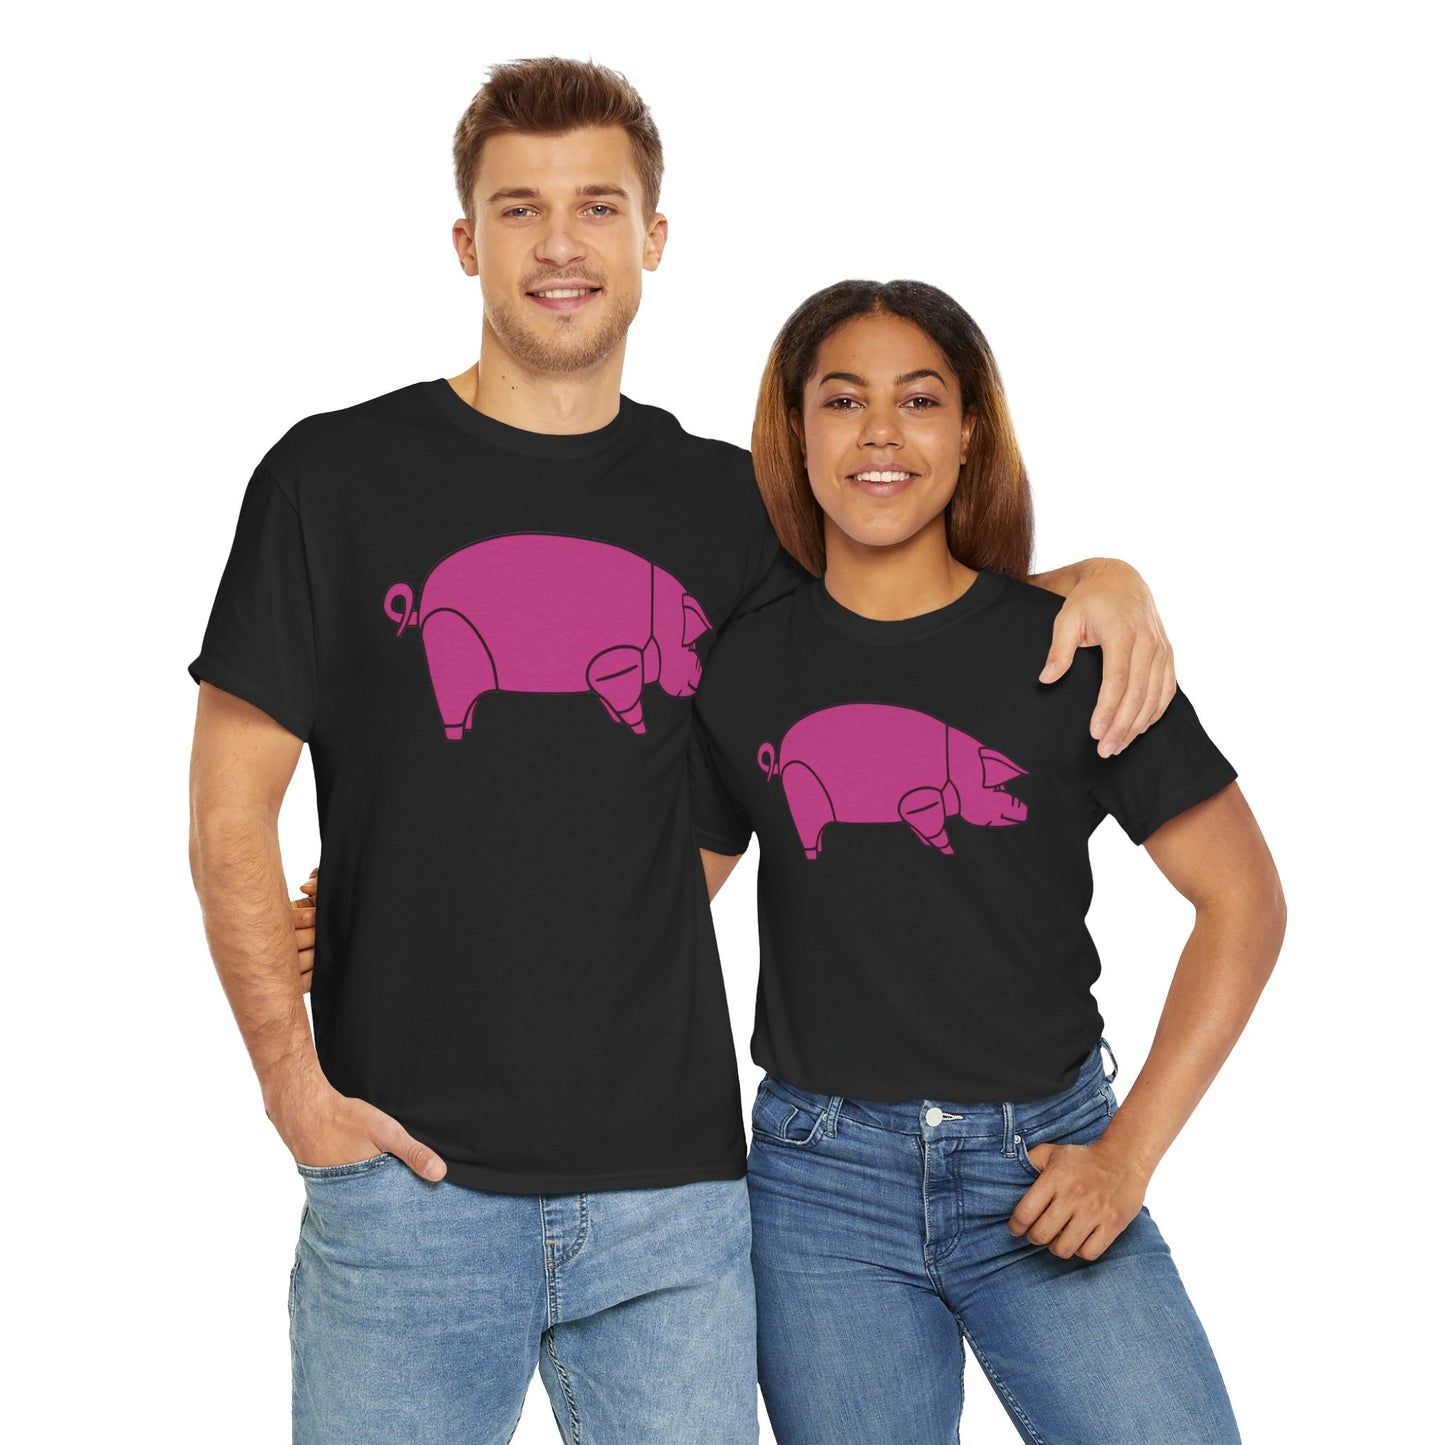 Pig shirt as worn by David Gilmour of Pink Floyd T-Shirt - RetroTeeShop